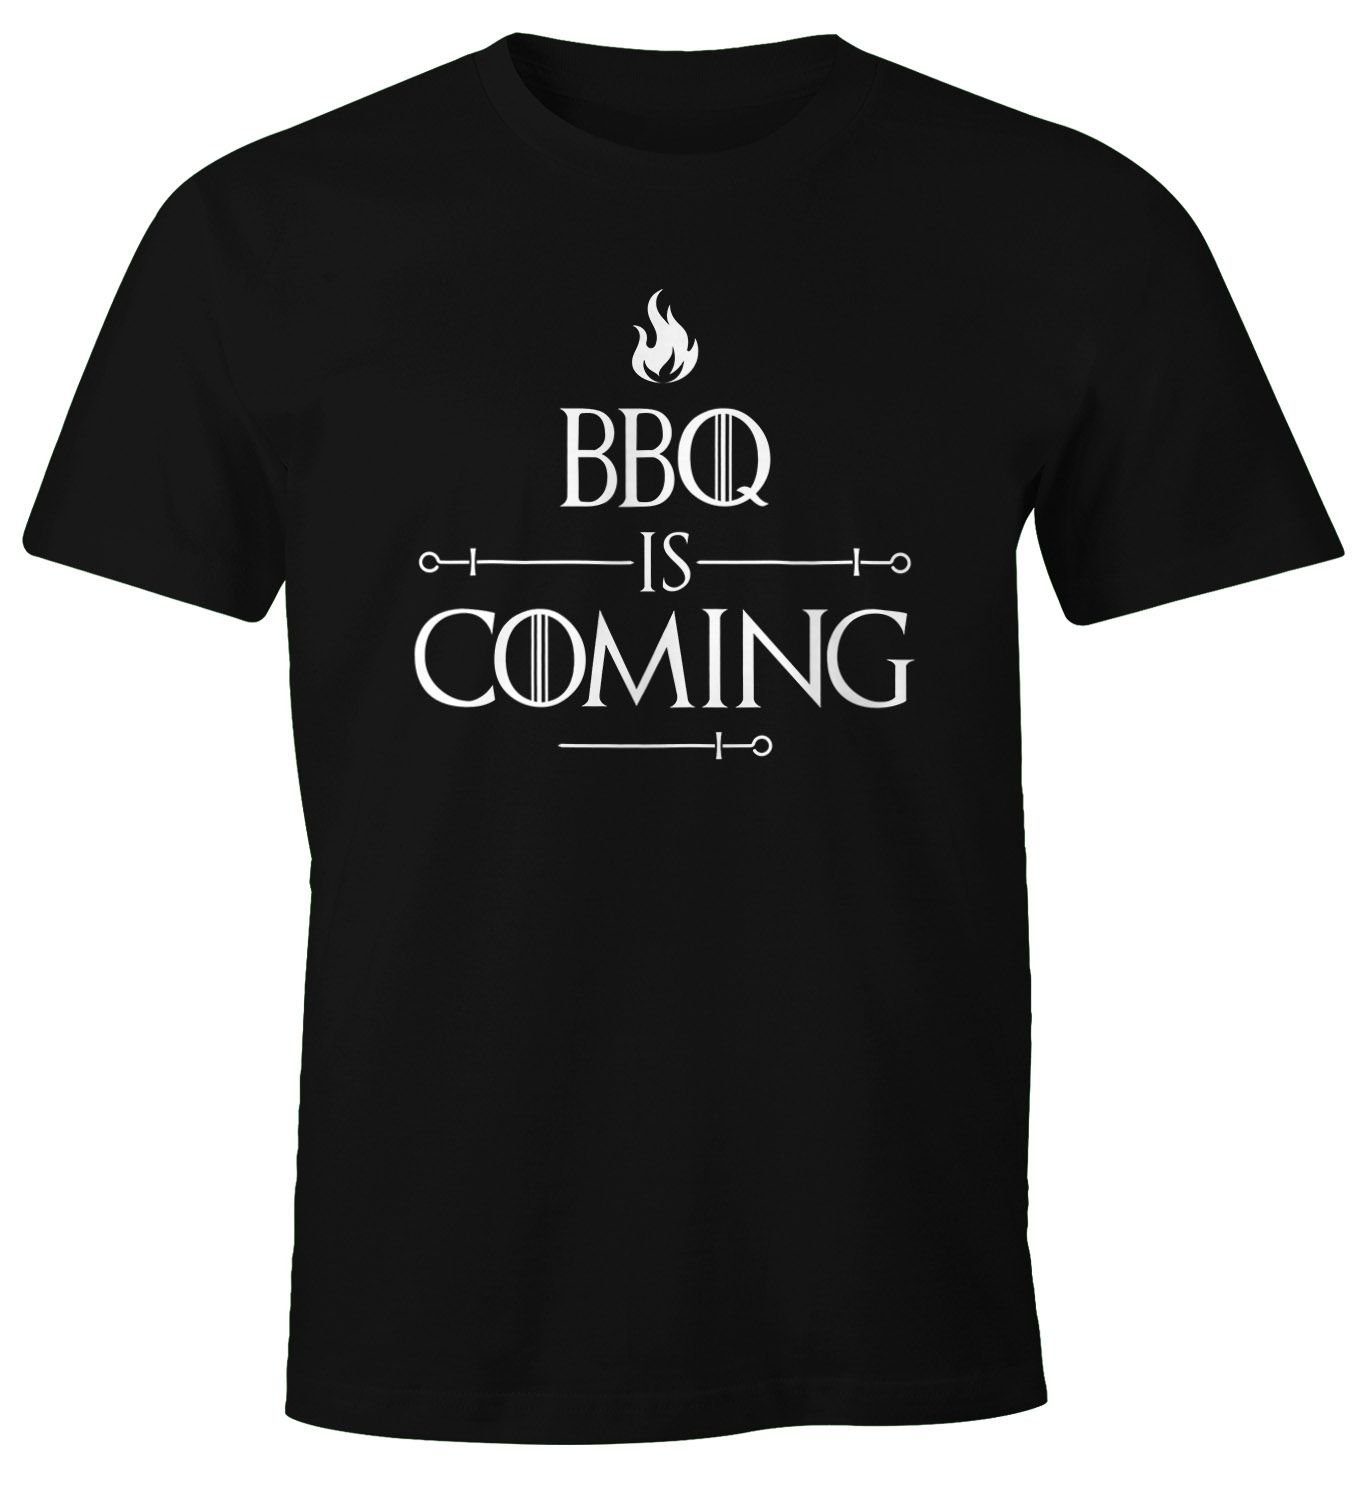 MoonWorks Print-Shirt Herren T-Shirt BBQ Is Coming Barbecue Grillen Spruch lustig Fun-Shirt Moonworks® mit Print